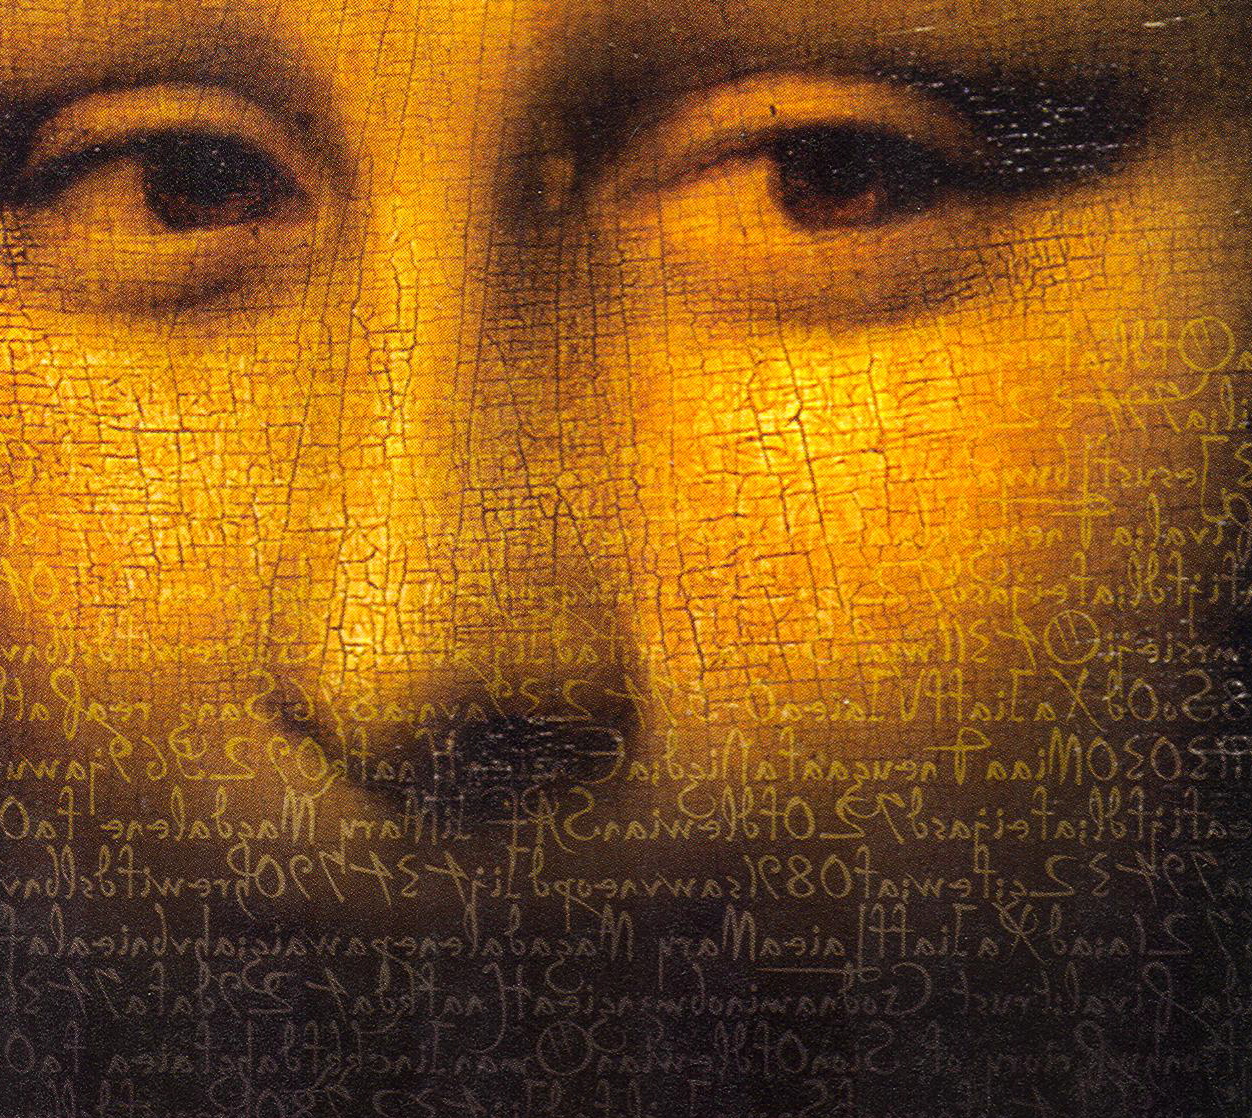 The Da Vinci Code #17